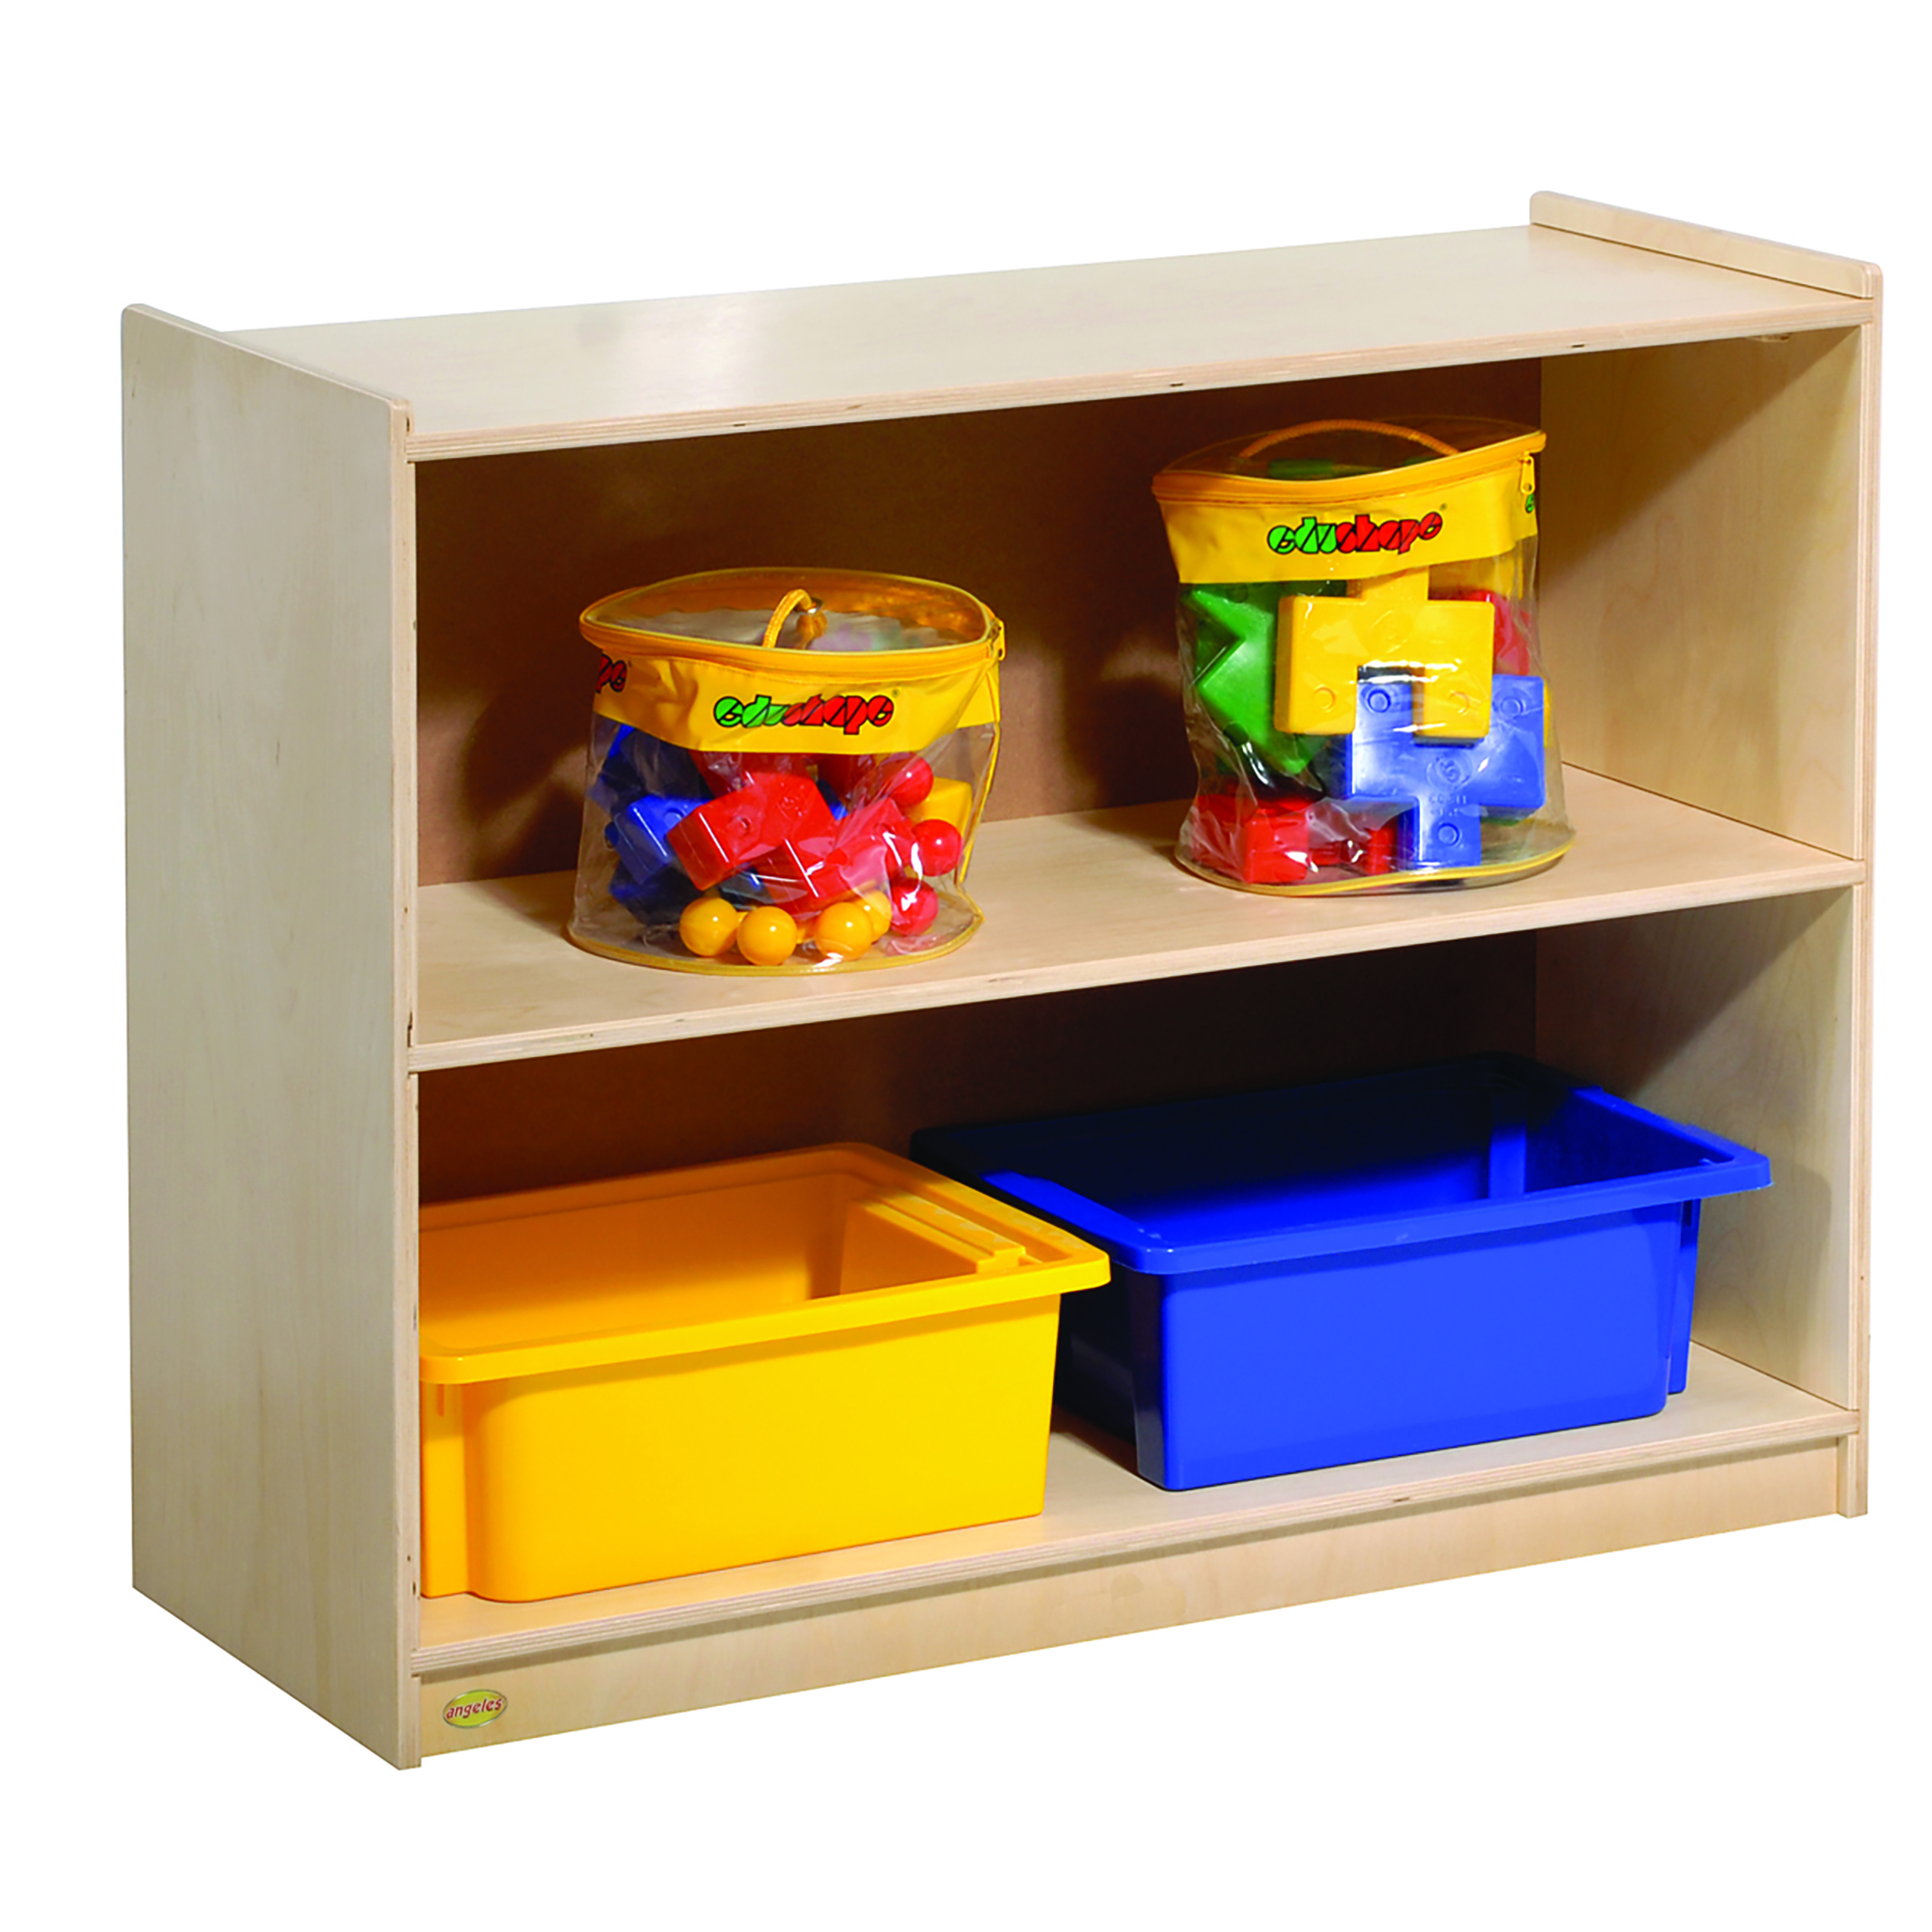 children's shelves and storage